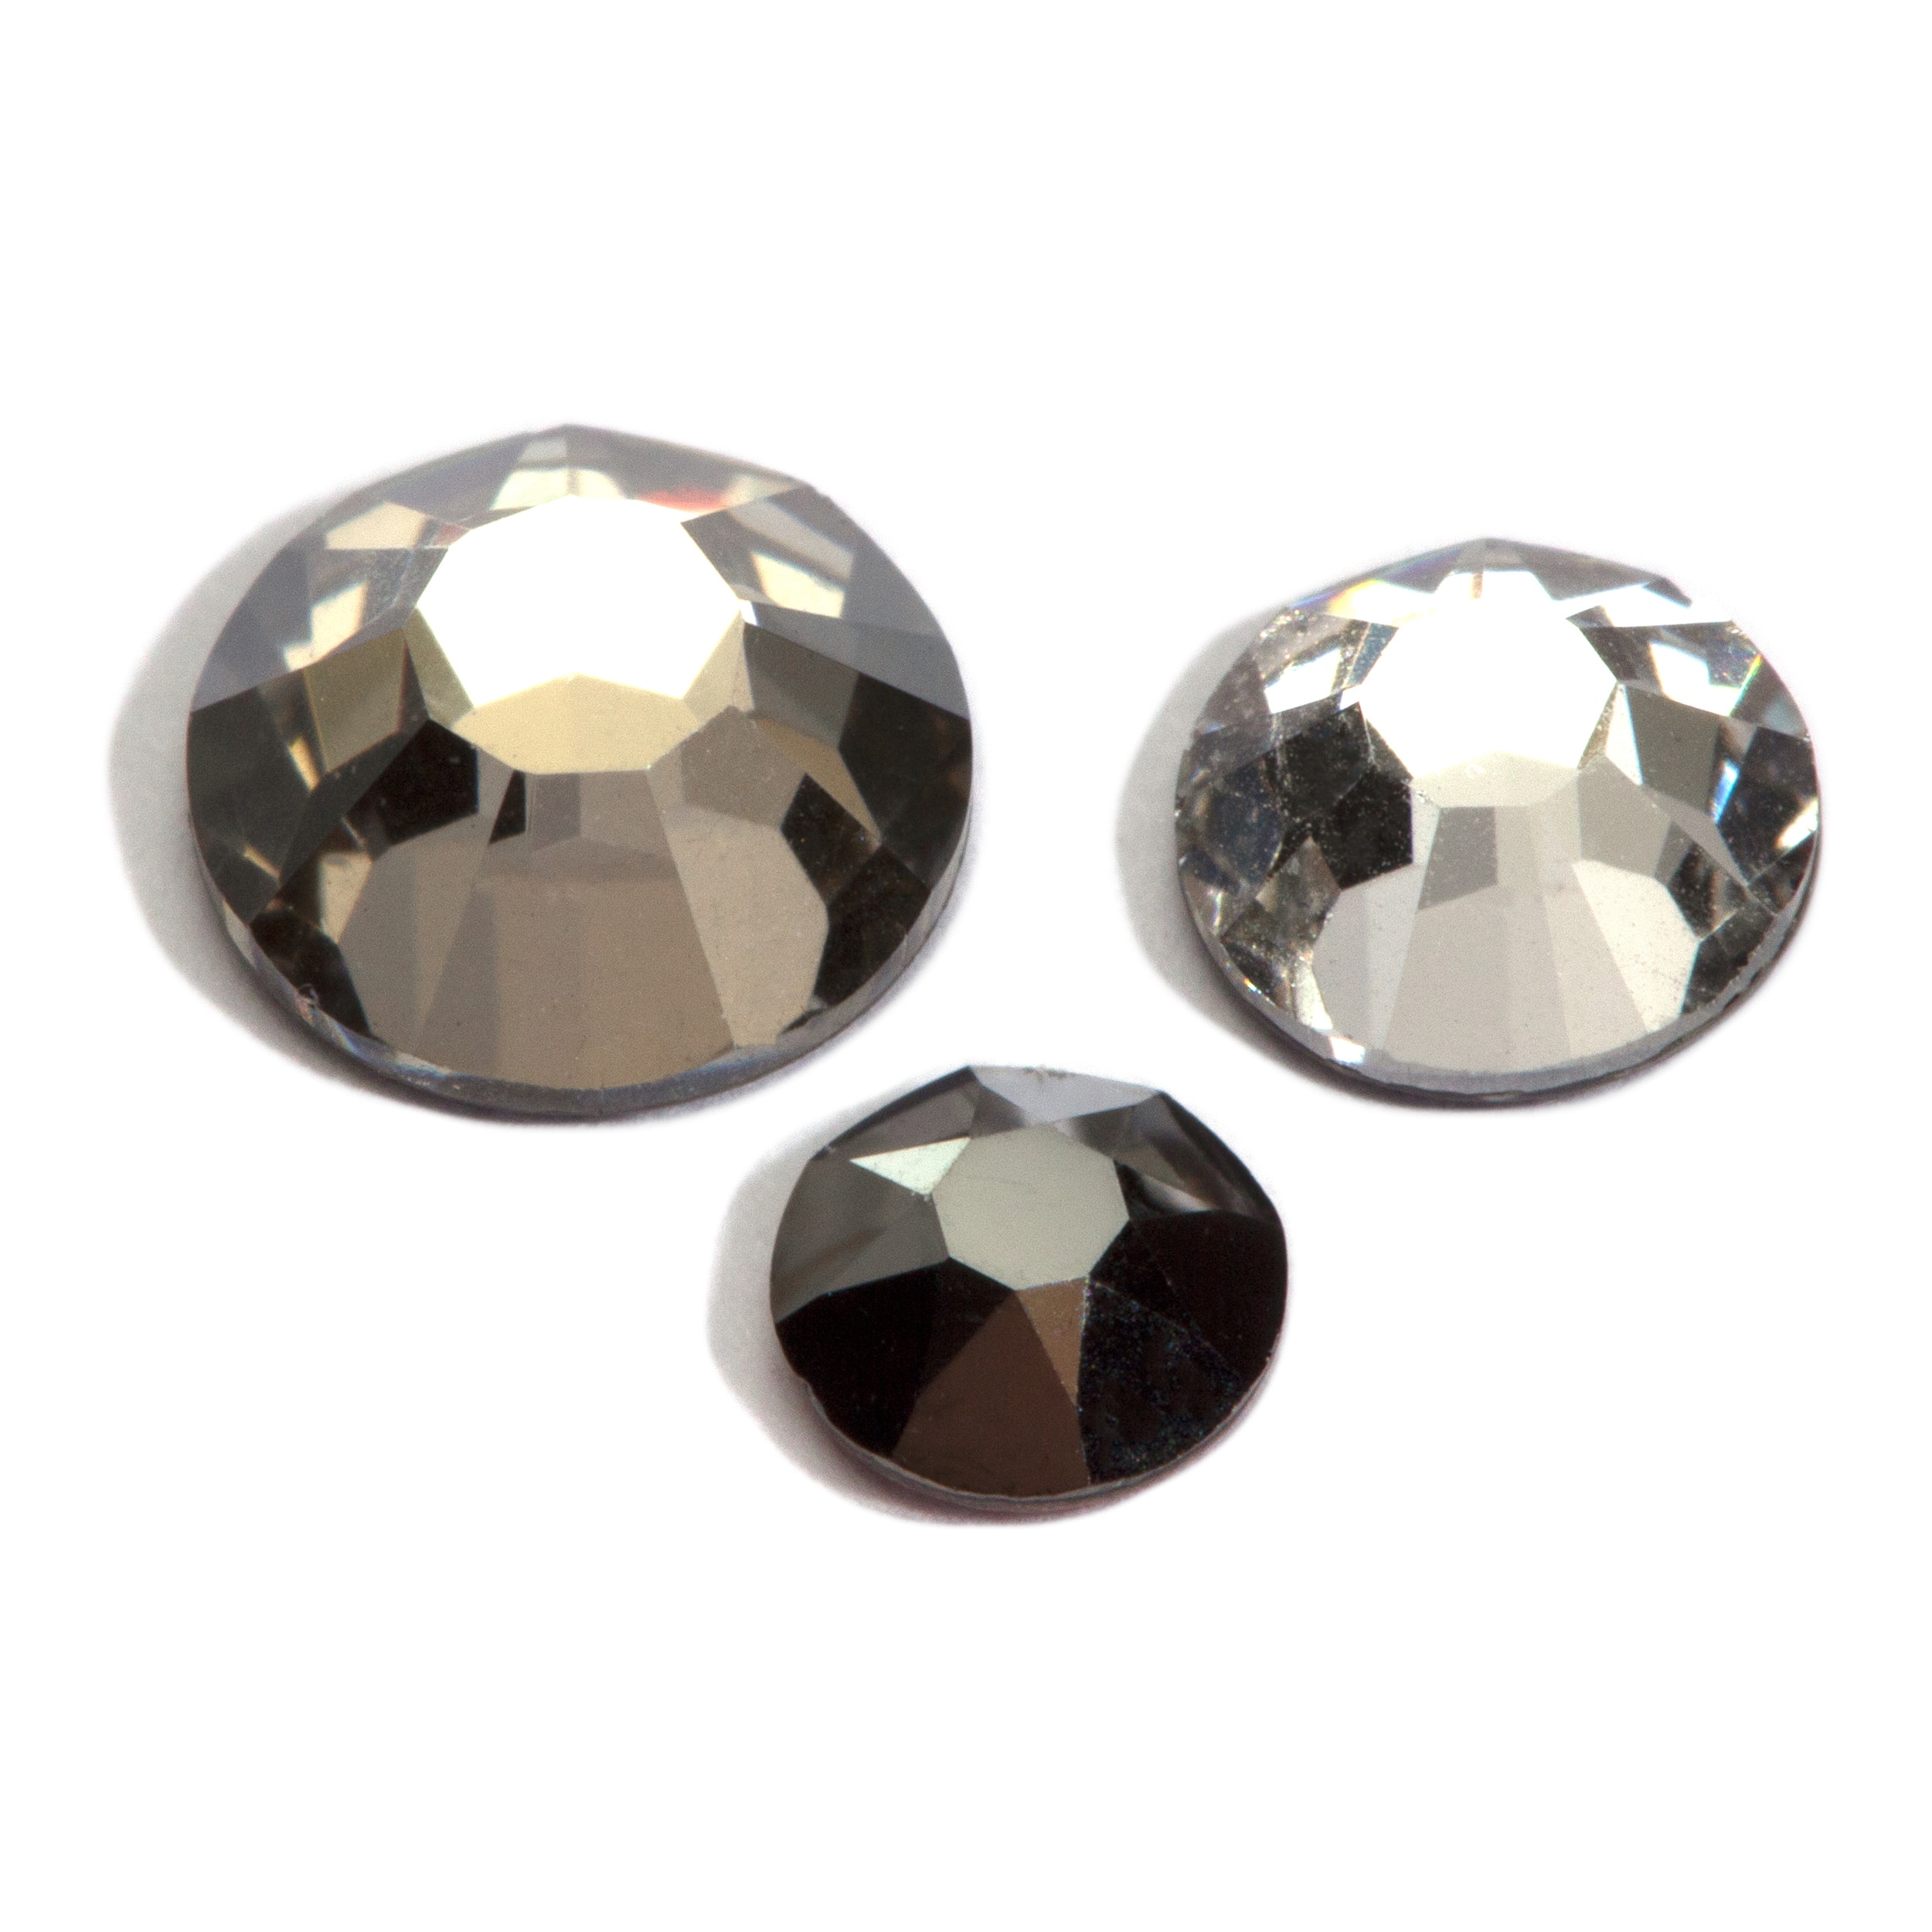 Hotfix rhinestones Flatback Crystal AB Iron On Round Stones for clothing  Decoration Crafts decorative diamond ss12 3mm 1440pcs